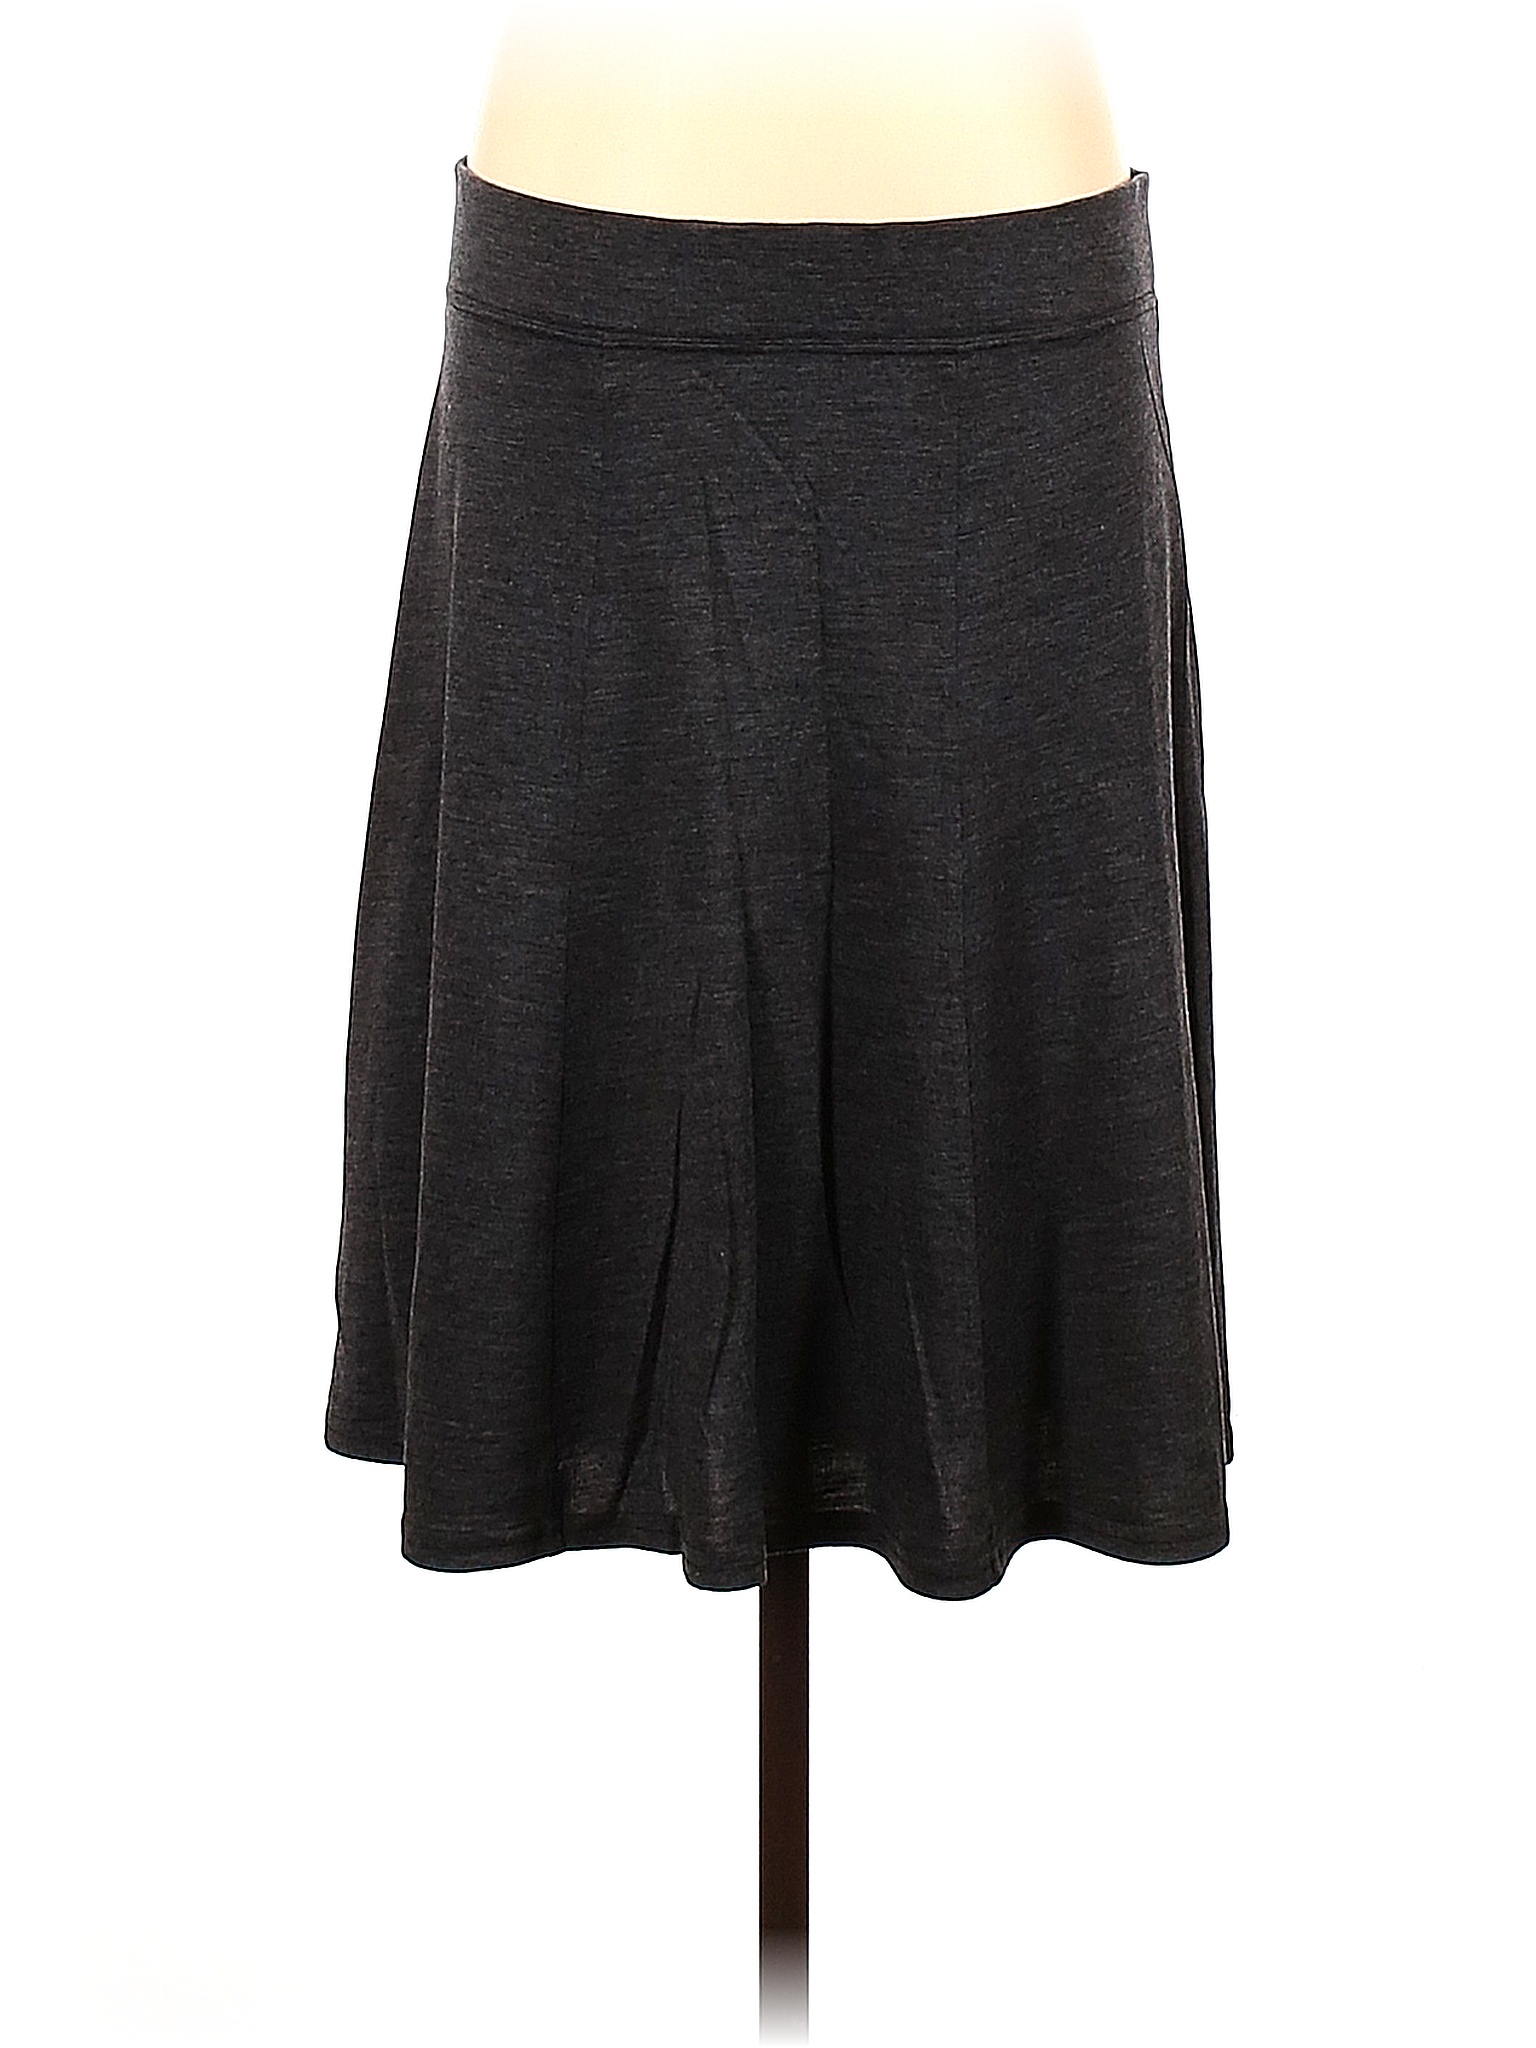 Sahalie 100% Wool Solid Black Gray Wool Skirt Size M - 62% off | thredUP